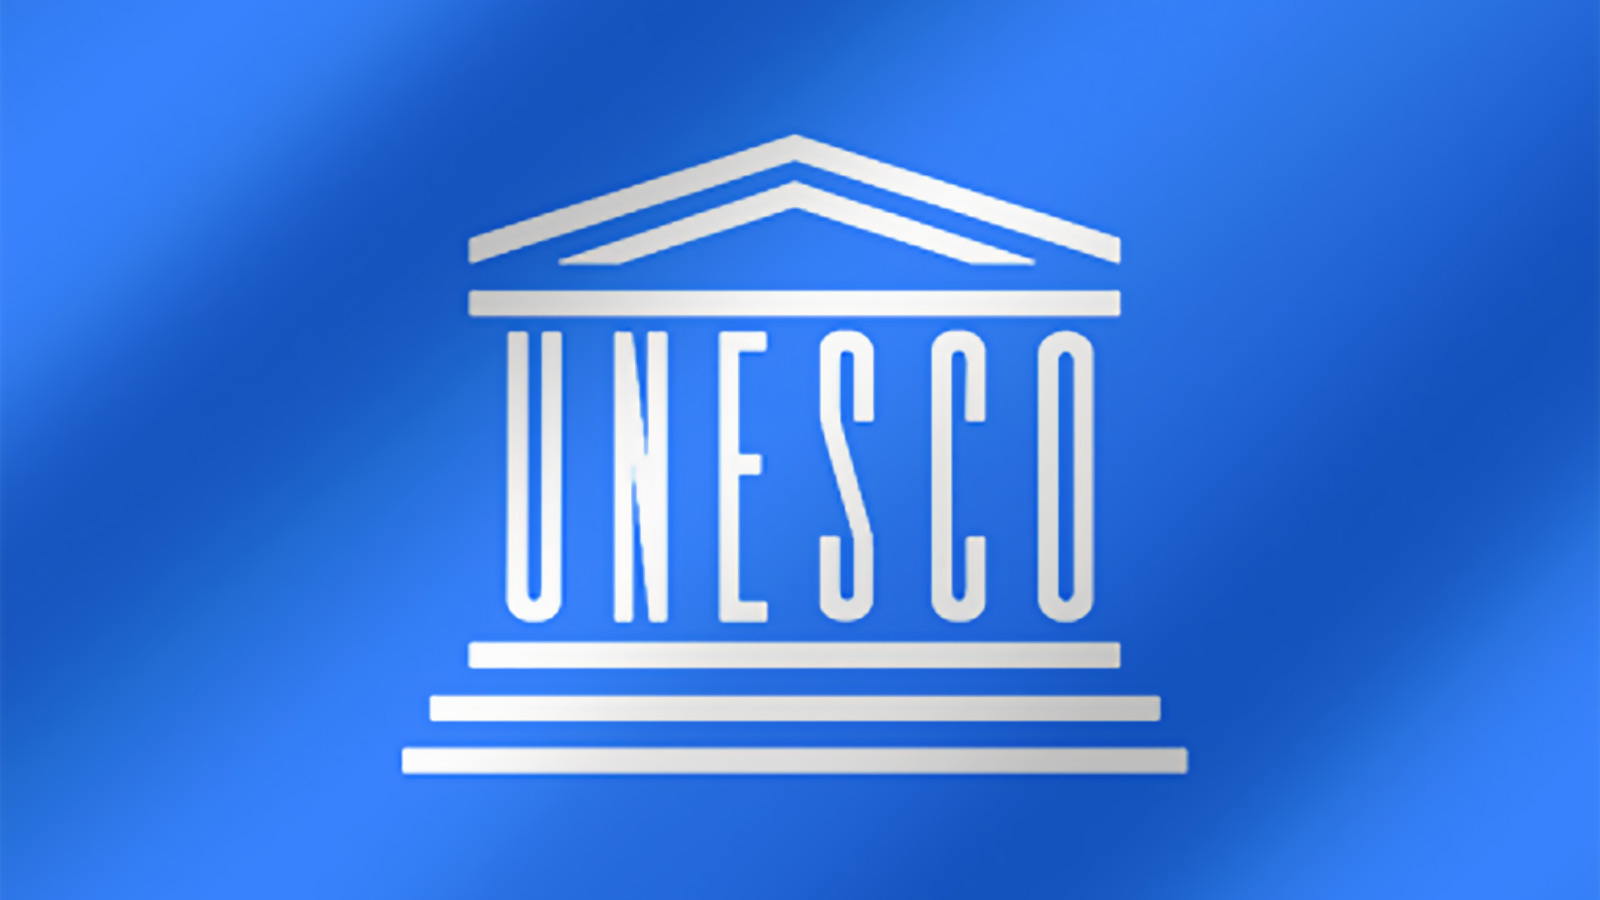 Unesco Wallpaper Free Unesco Background